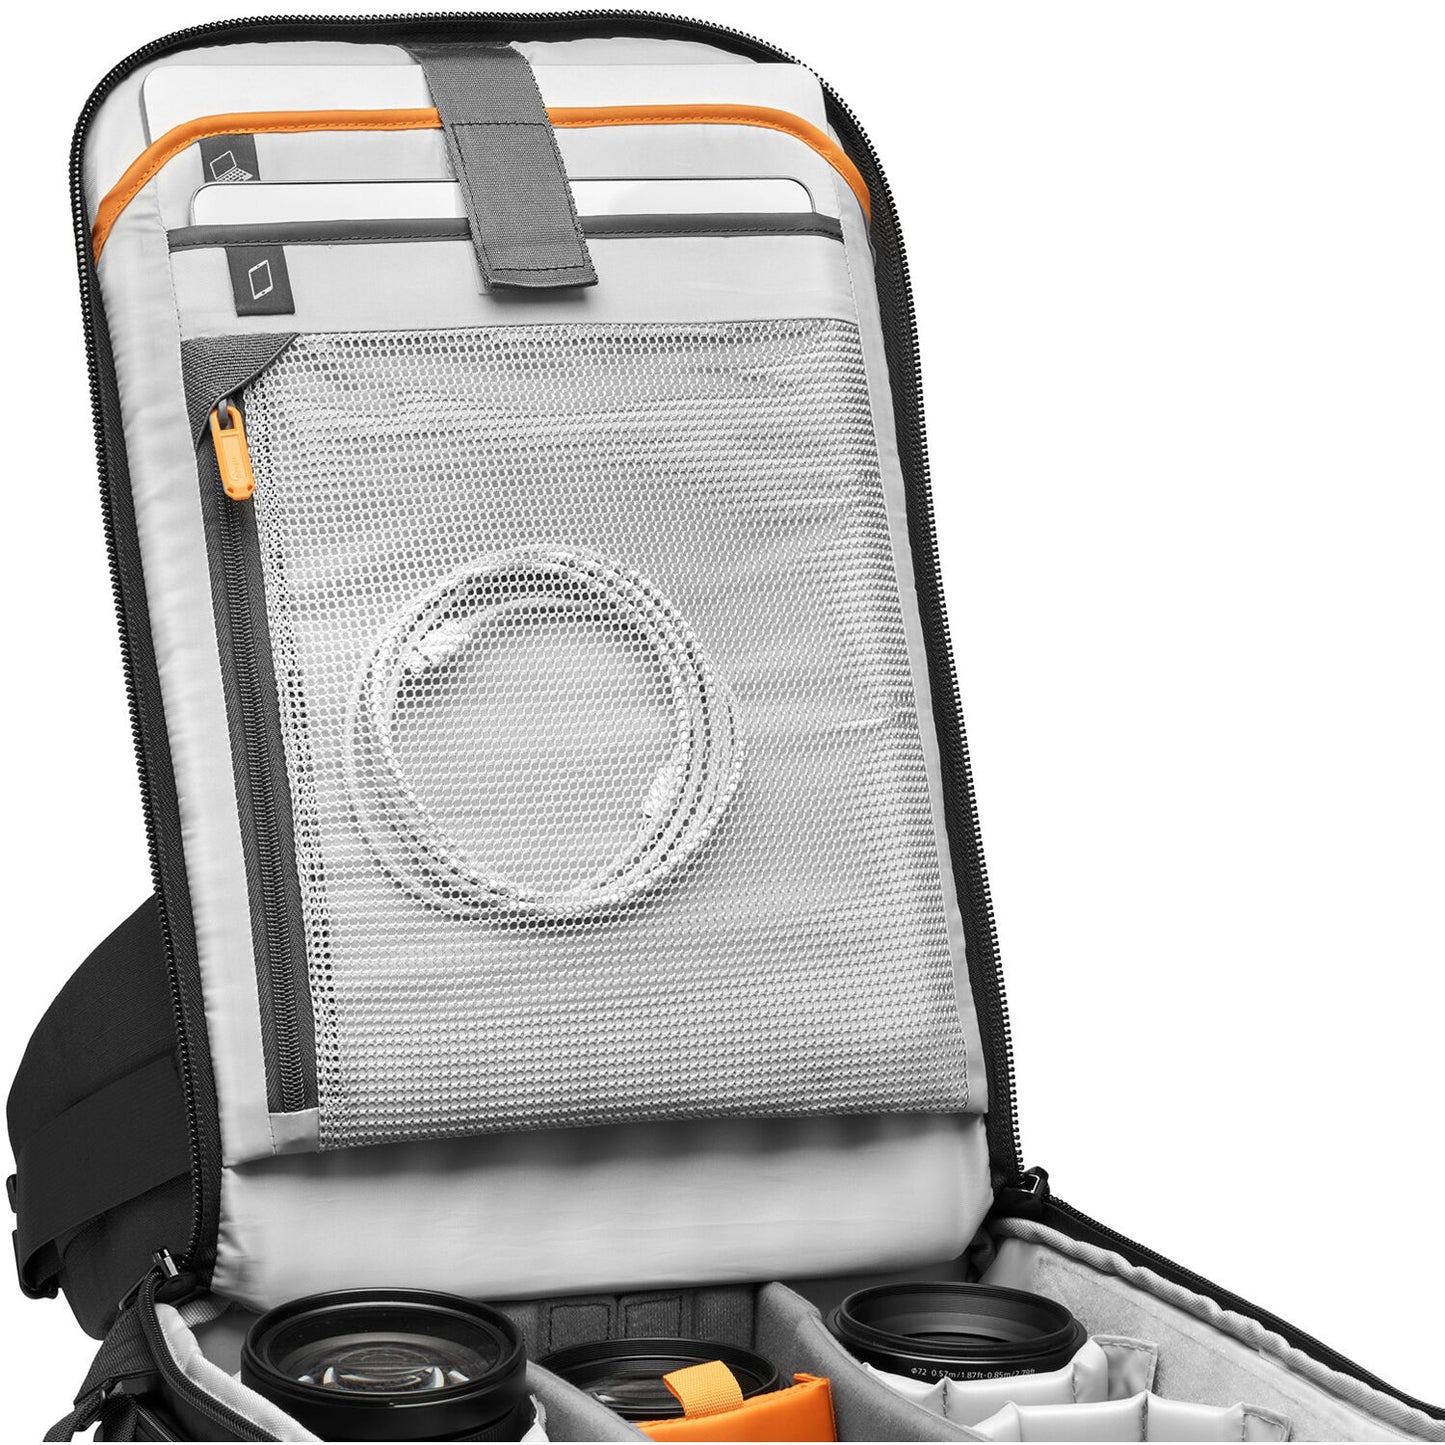 Lowepro Flipside BP 400 AW III Black Camera Backpack Bag Water Resistant with Adjustable Dividers for DSLR Cameras Lens